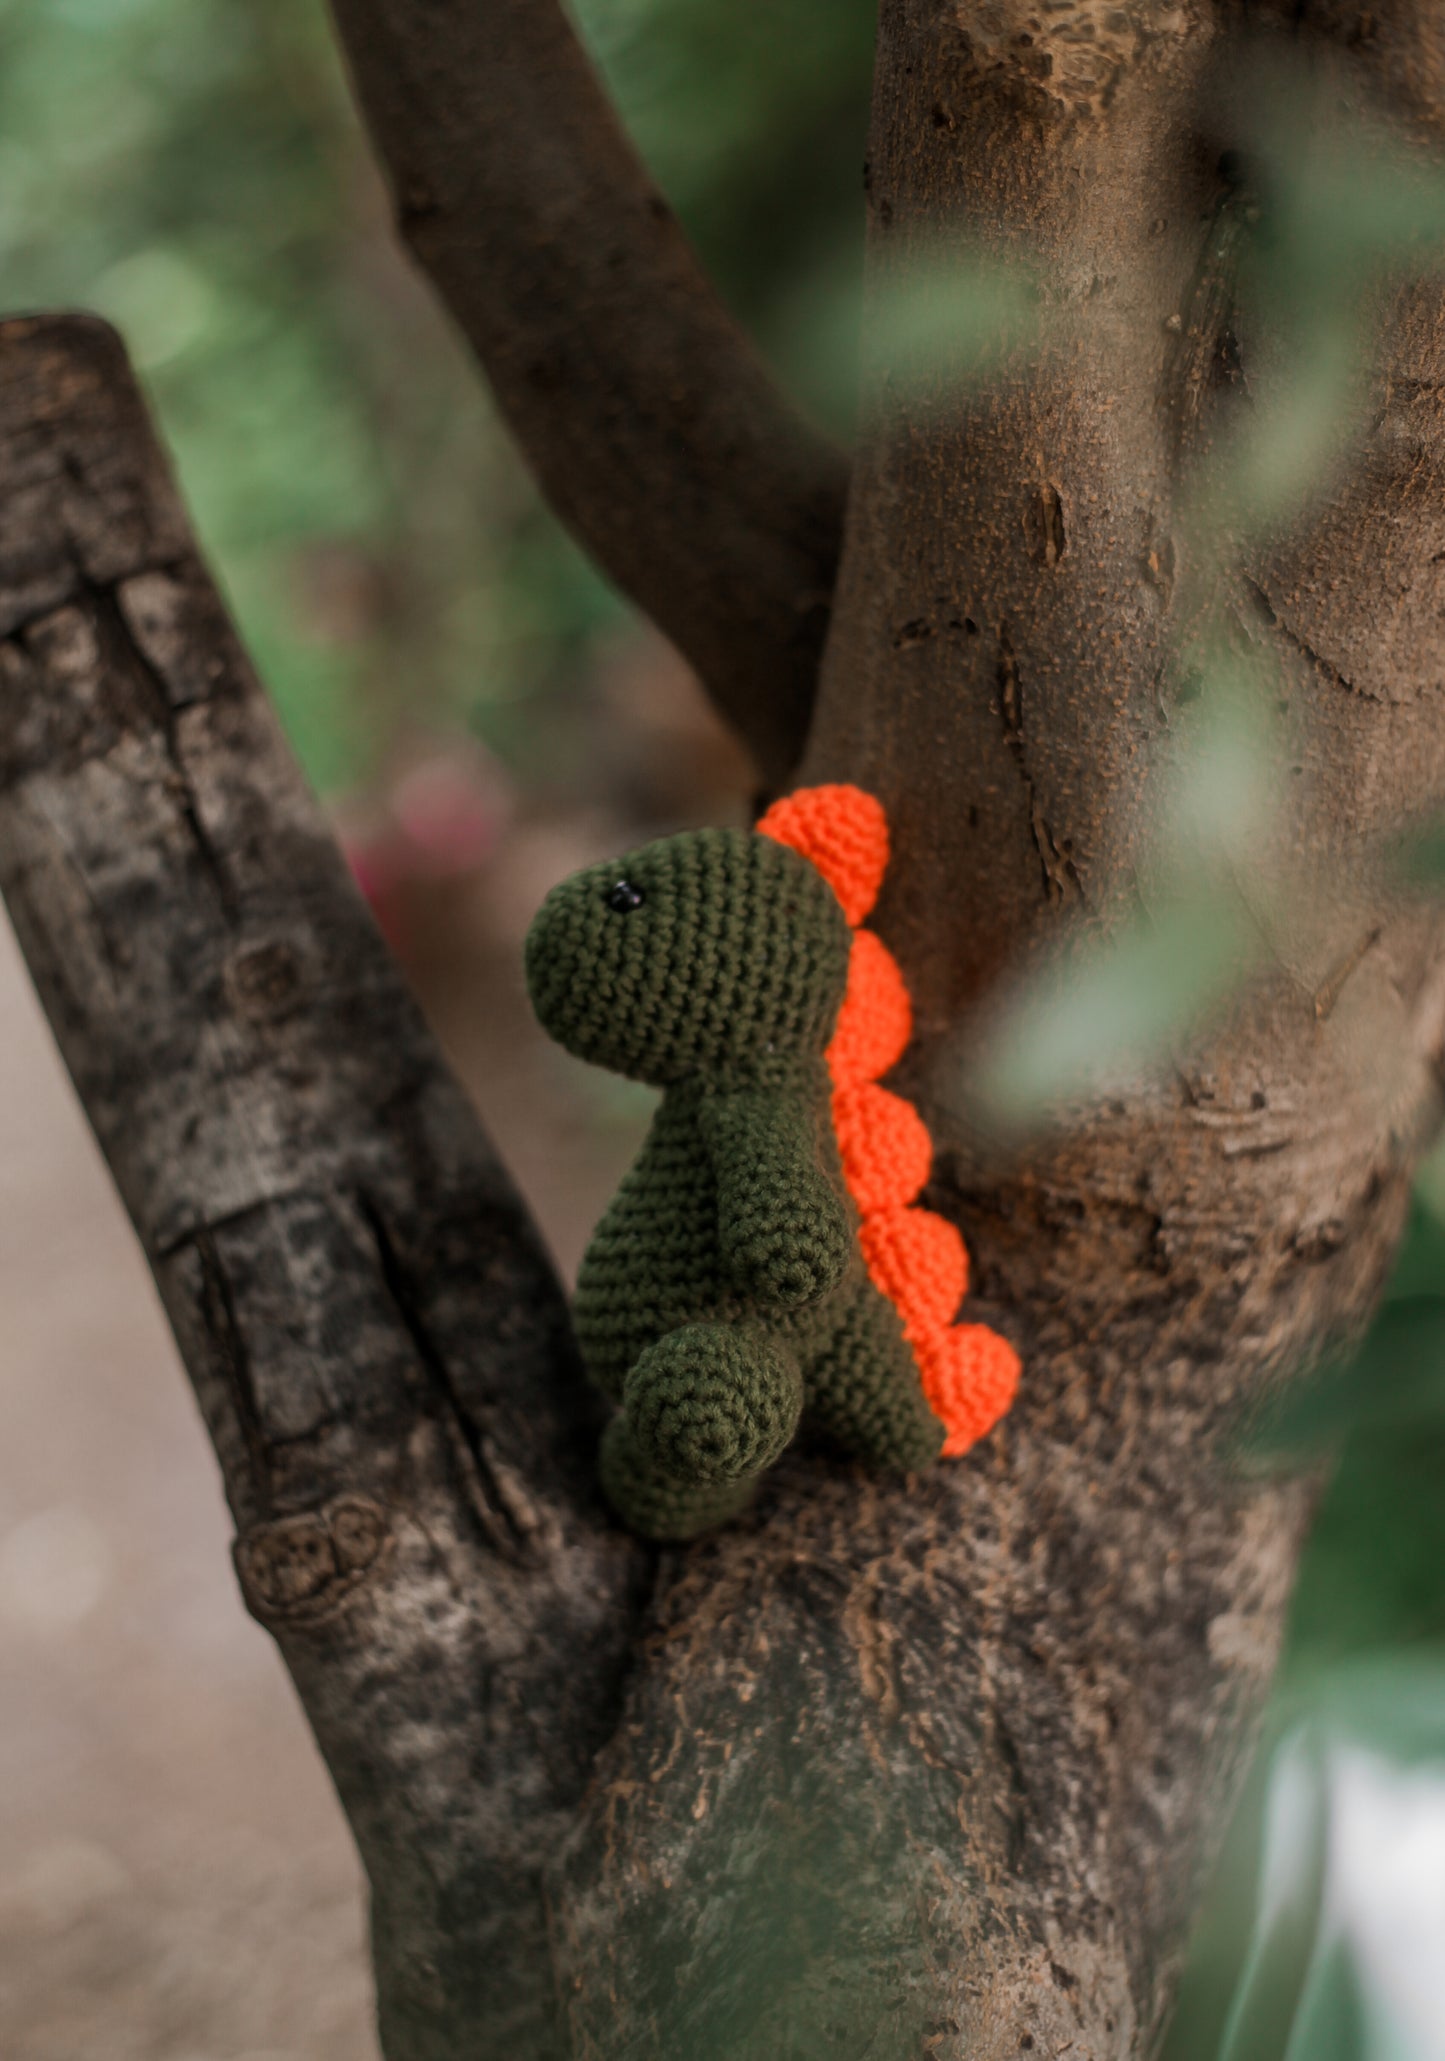 Master 2 Key Ring : Amigurumi Bear keychain, Bear amigurumi keychain, crochet keychain, couple bear, cute Bear keychain, handmade crochet Bear